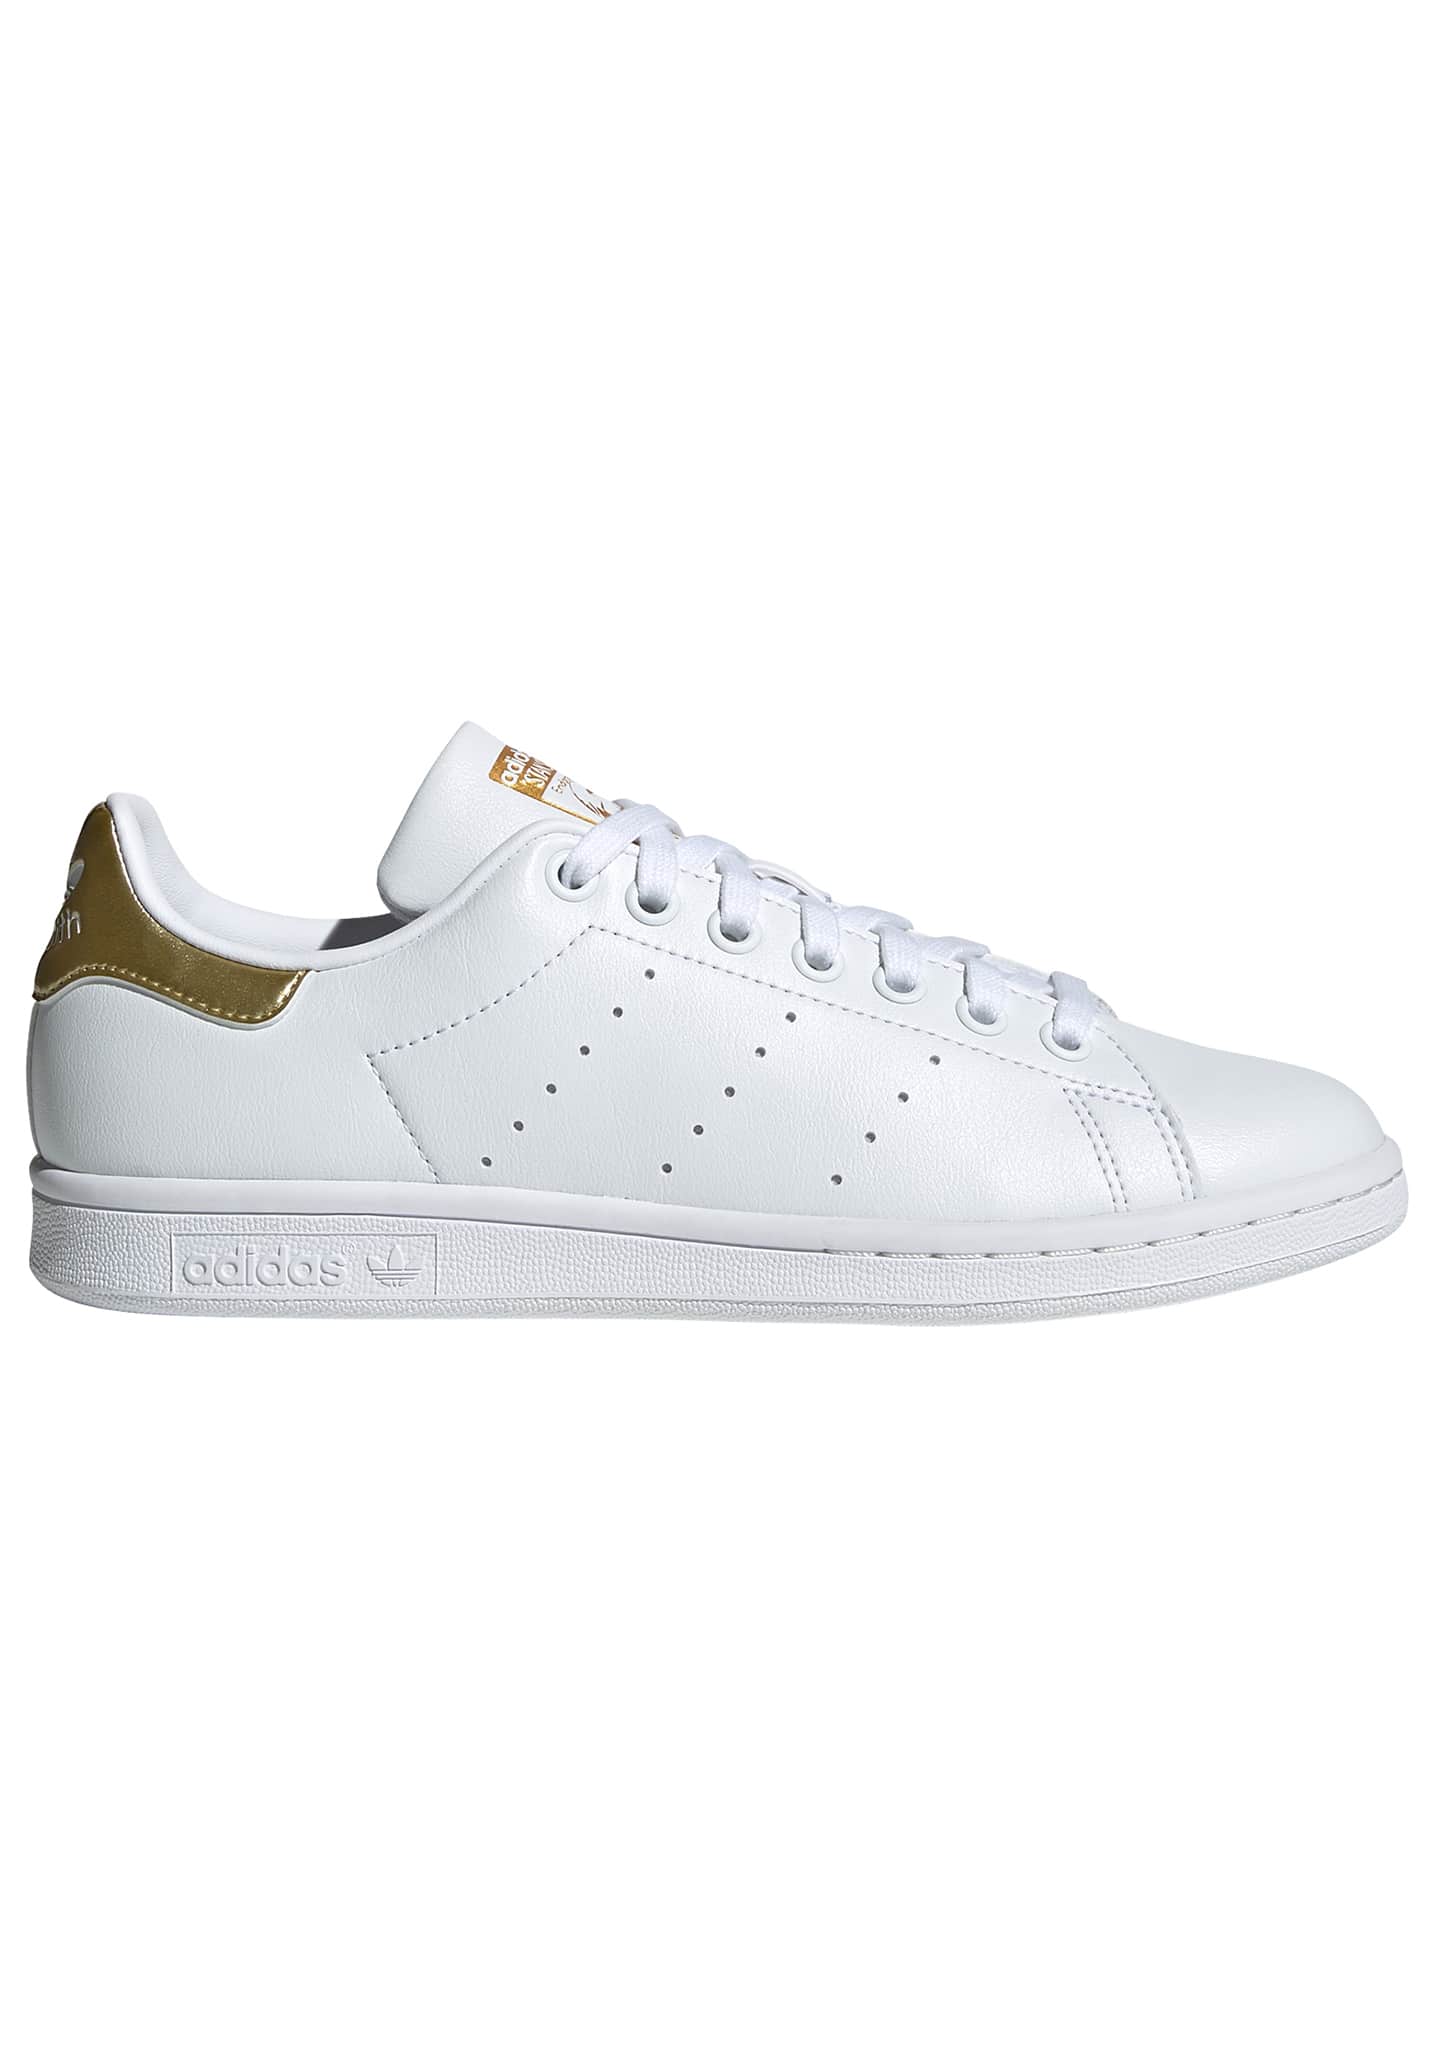 Adidas Originals Stan Smith Sneaker Low schuhe weiß/ gold metallic 36